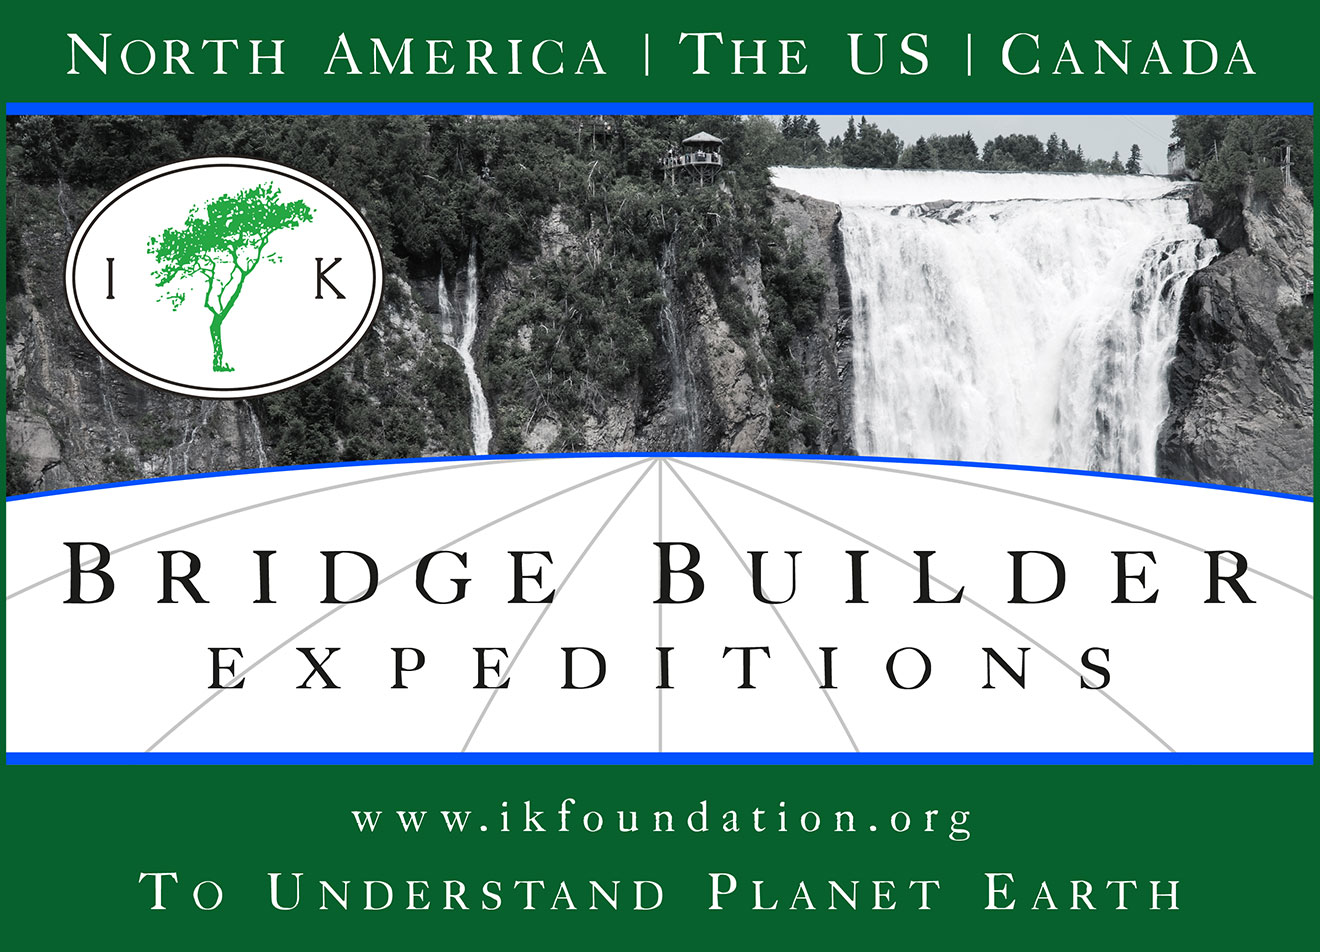 BRIDGE BUILDER EXPEDITIONS - NORTH AMERICA